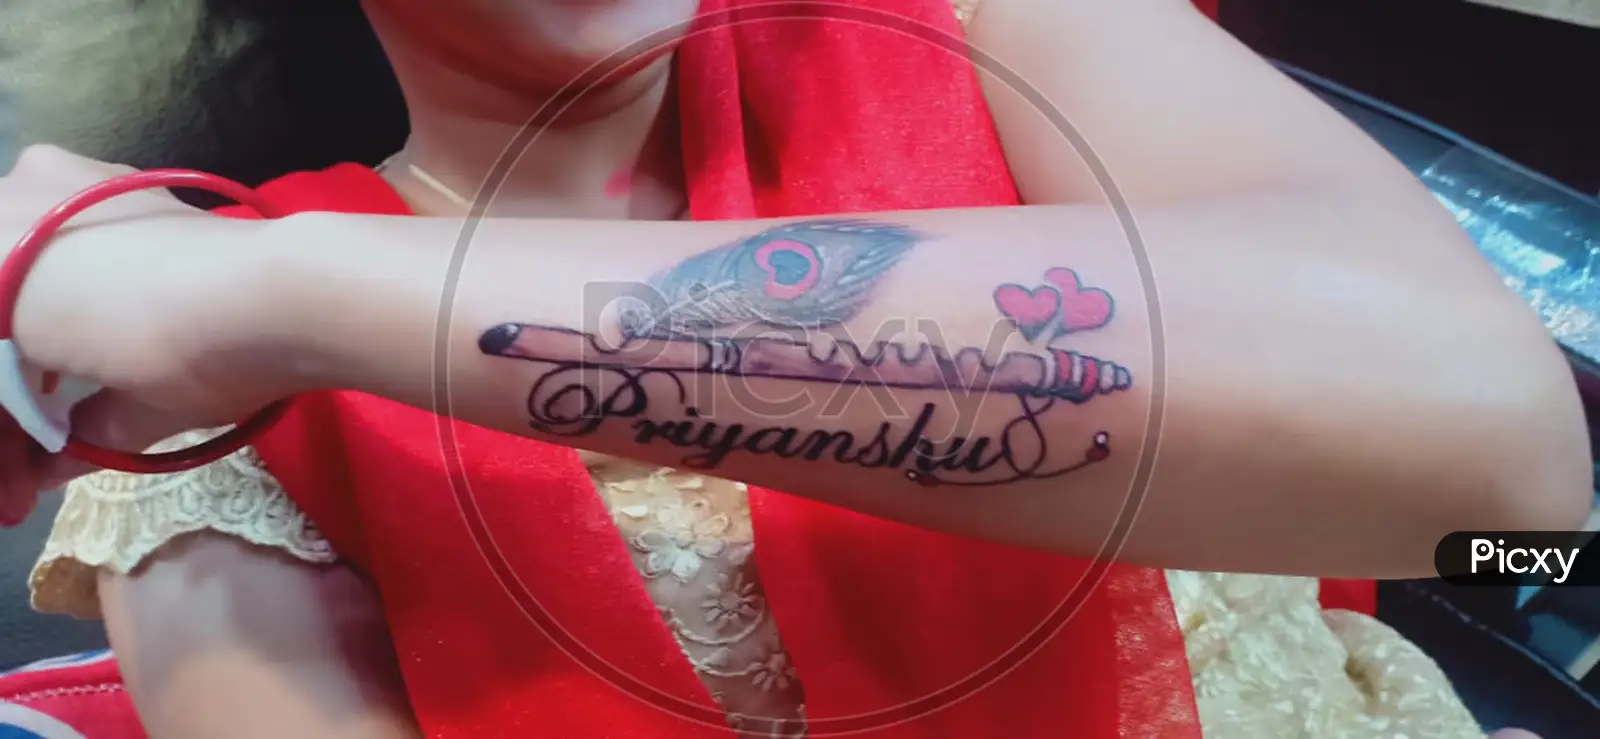 Who is Mahesh Chavan the tattoo artist Can you share the address of Mahesh  chavan  Quora